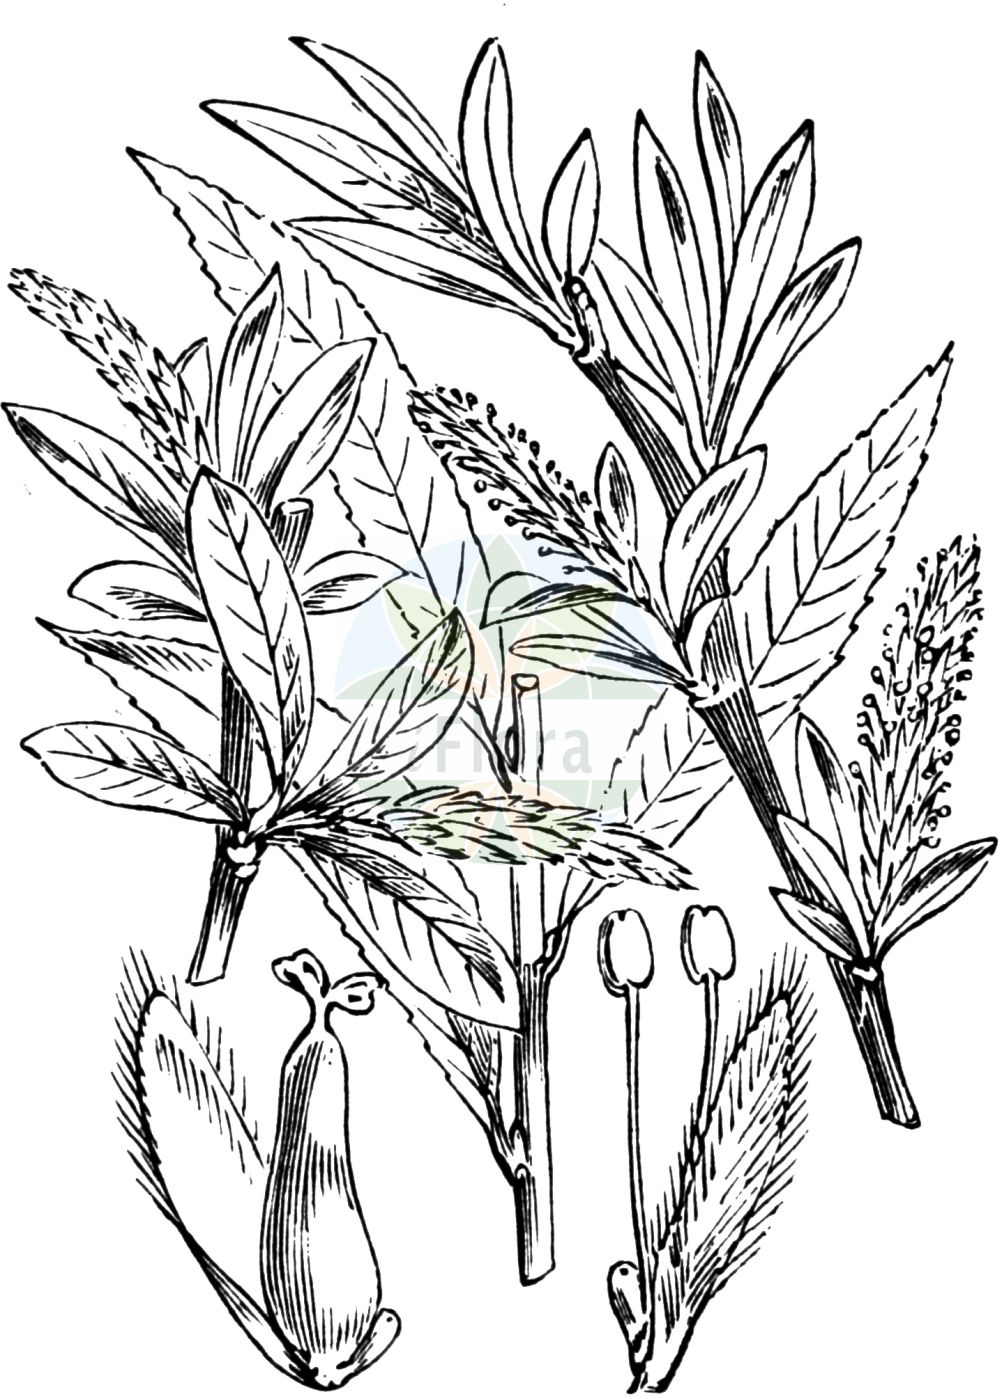 Ива белая (Salix Alba l.)